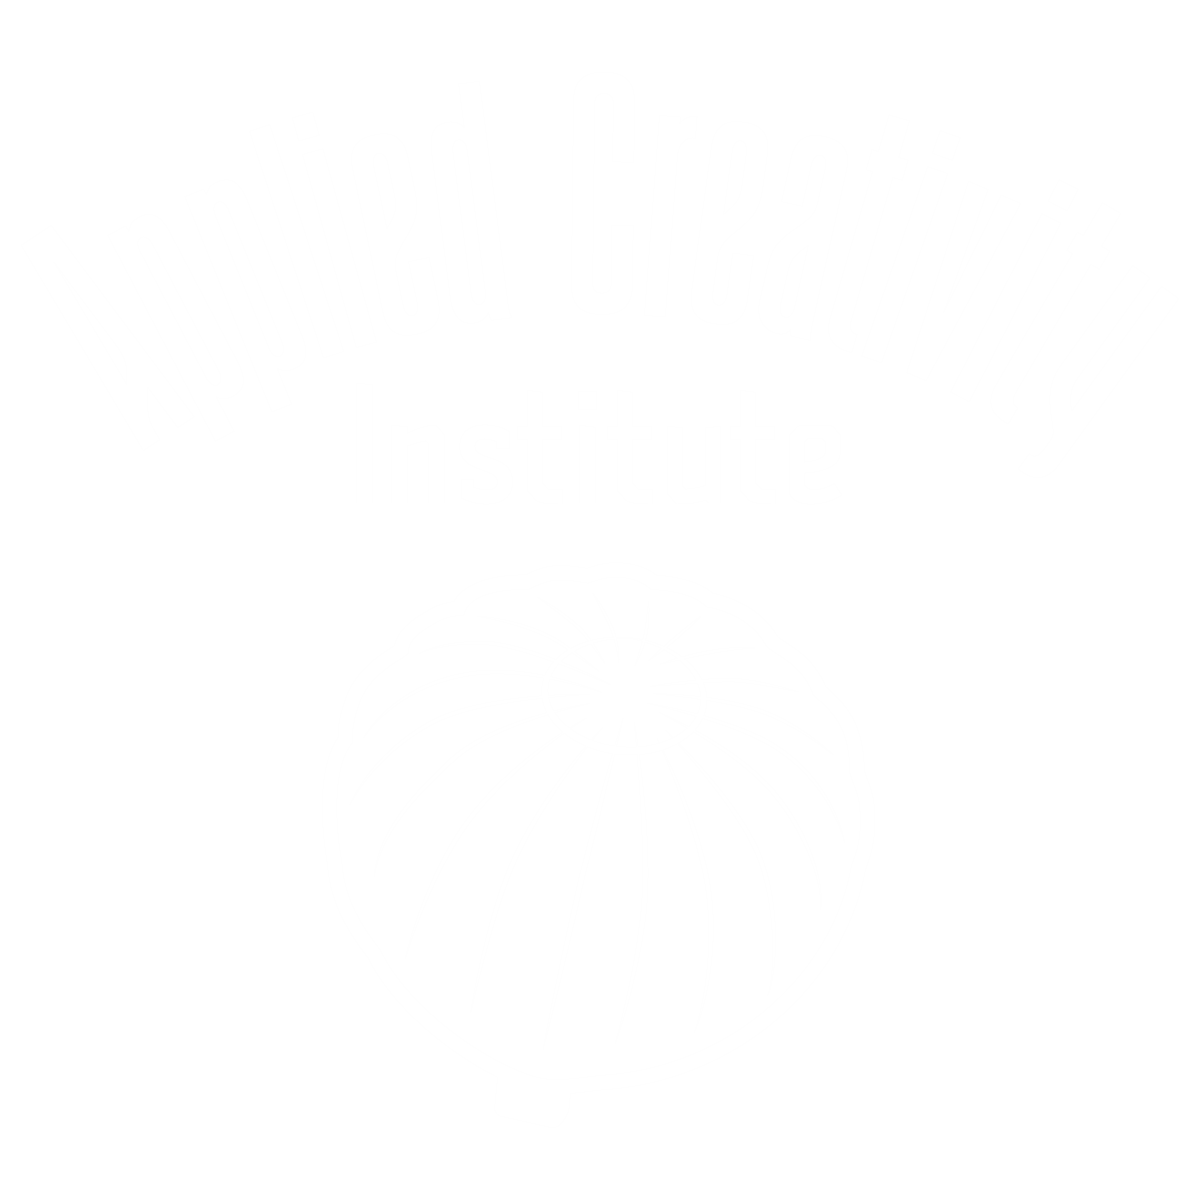 applied-creativity-logo-white-01